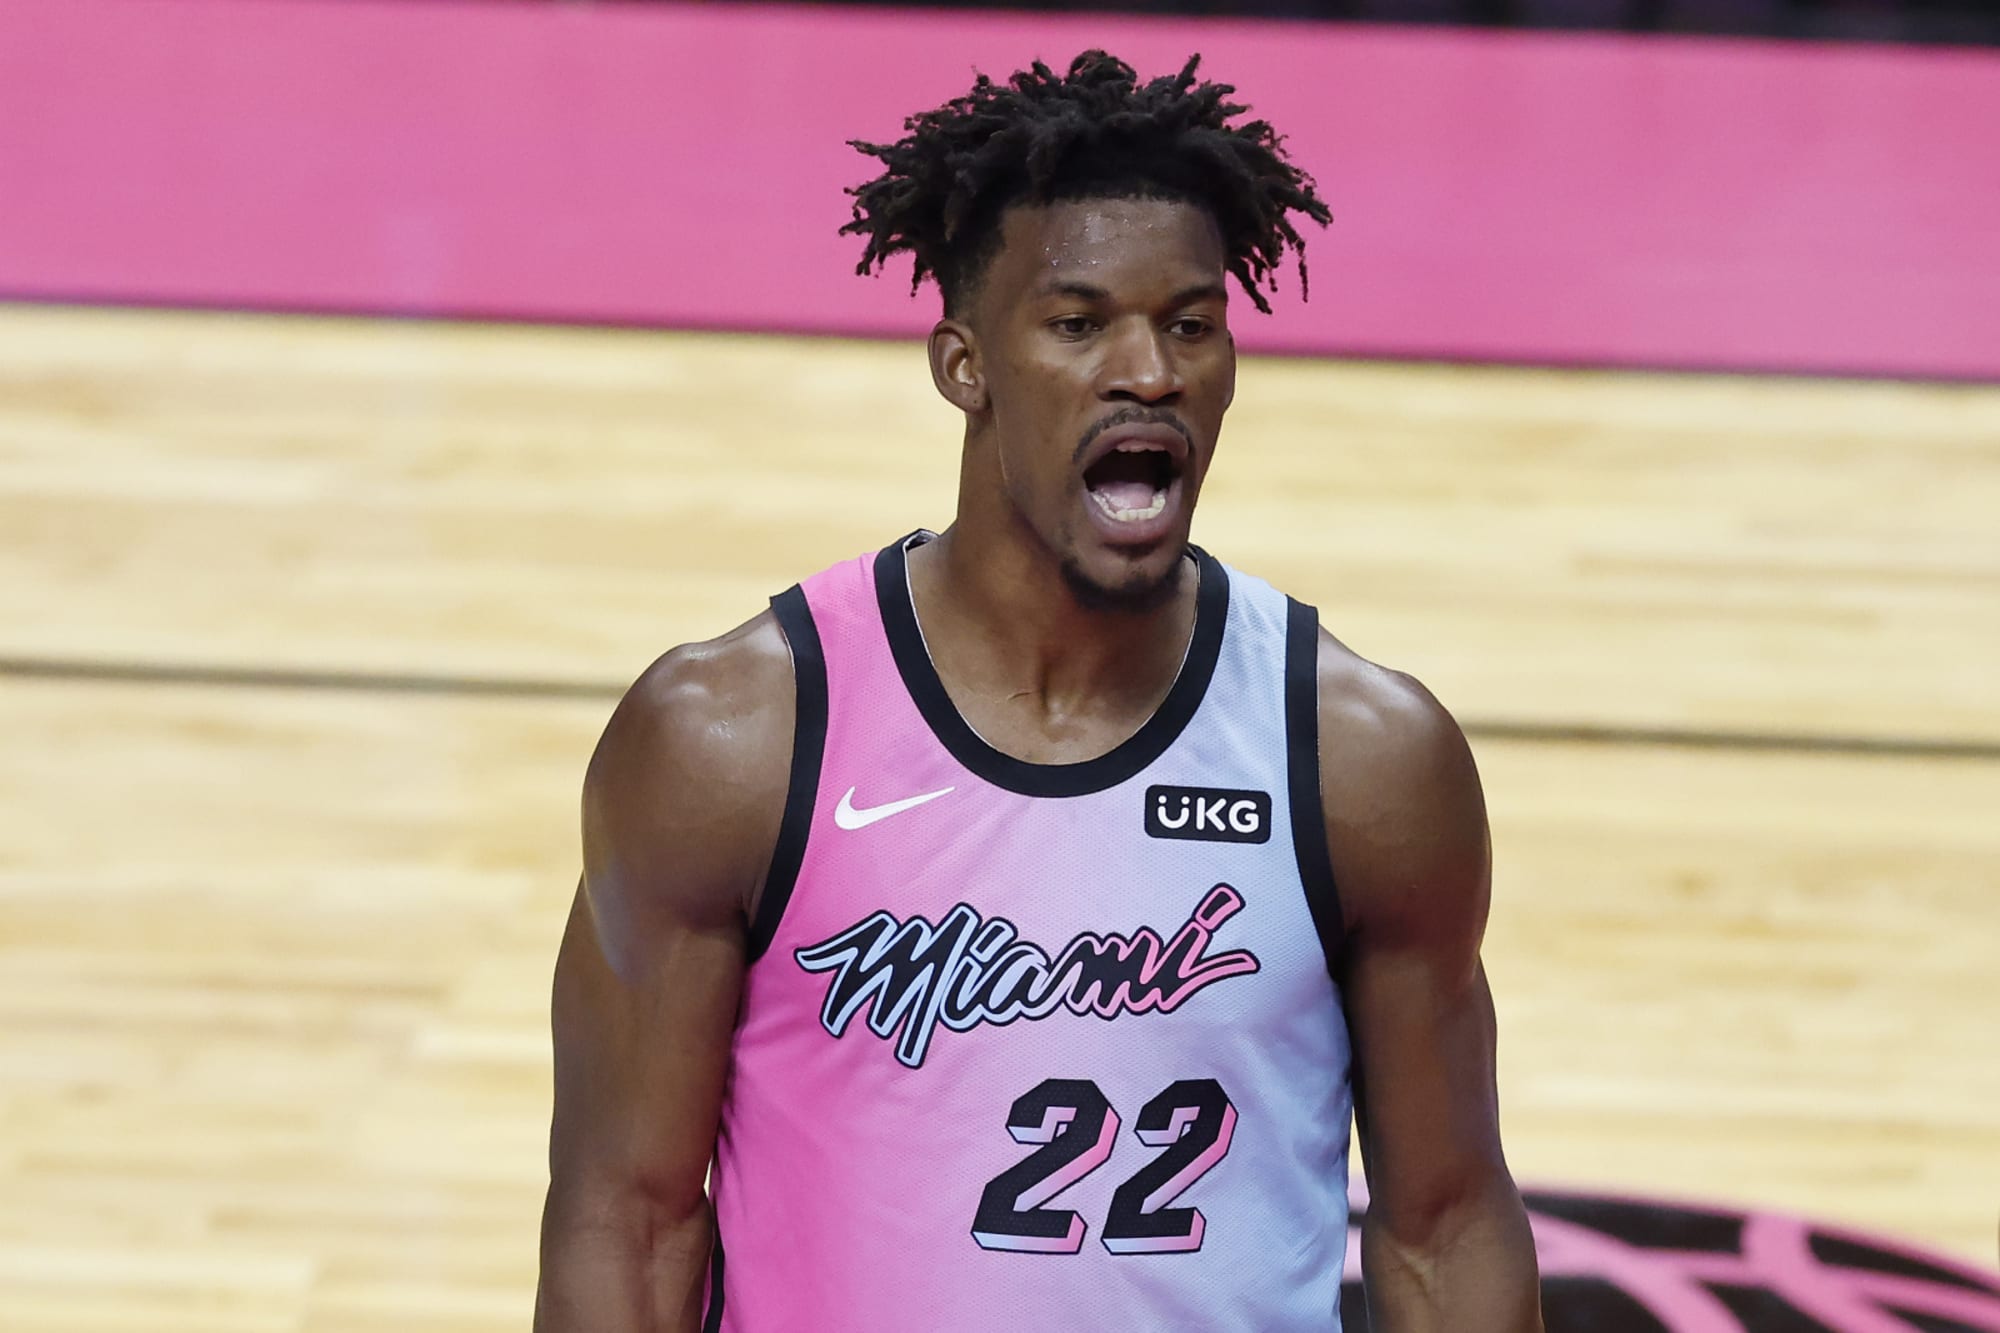 Miami Heat: Predicting Jimmy Butler's stats for next season